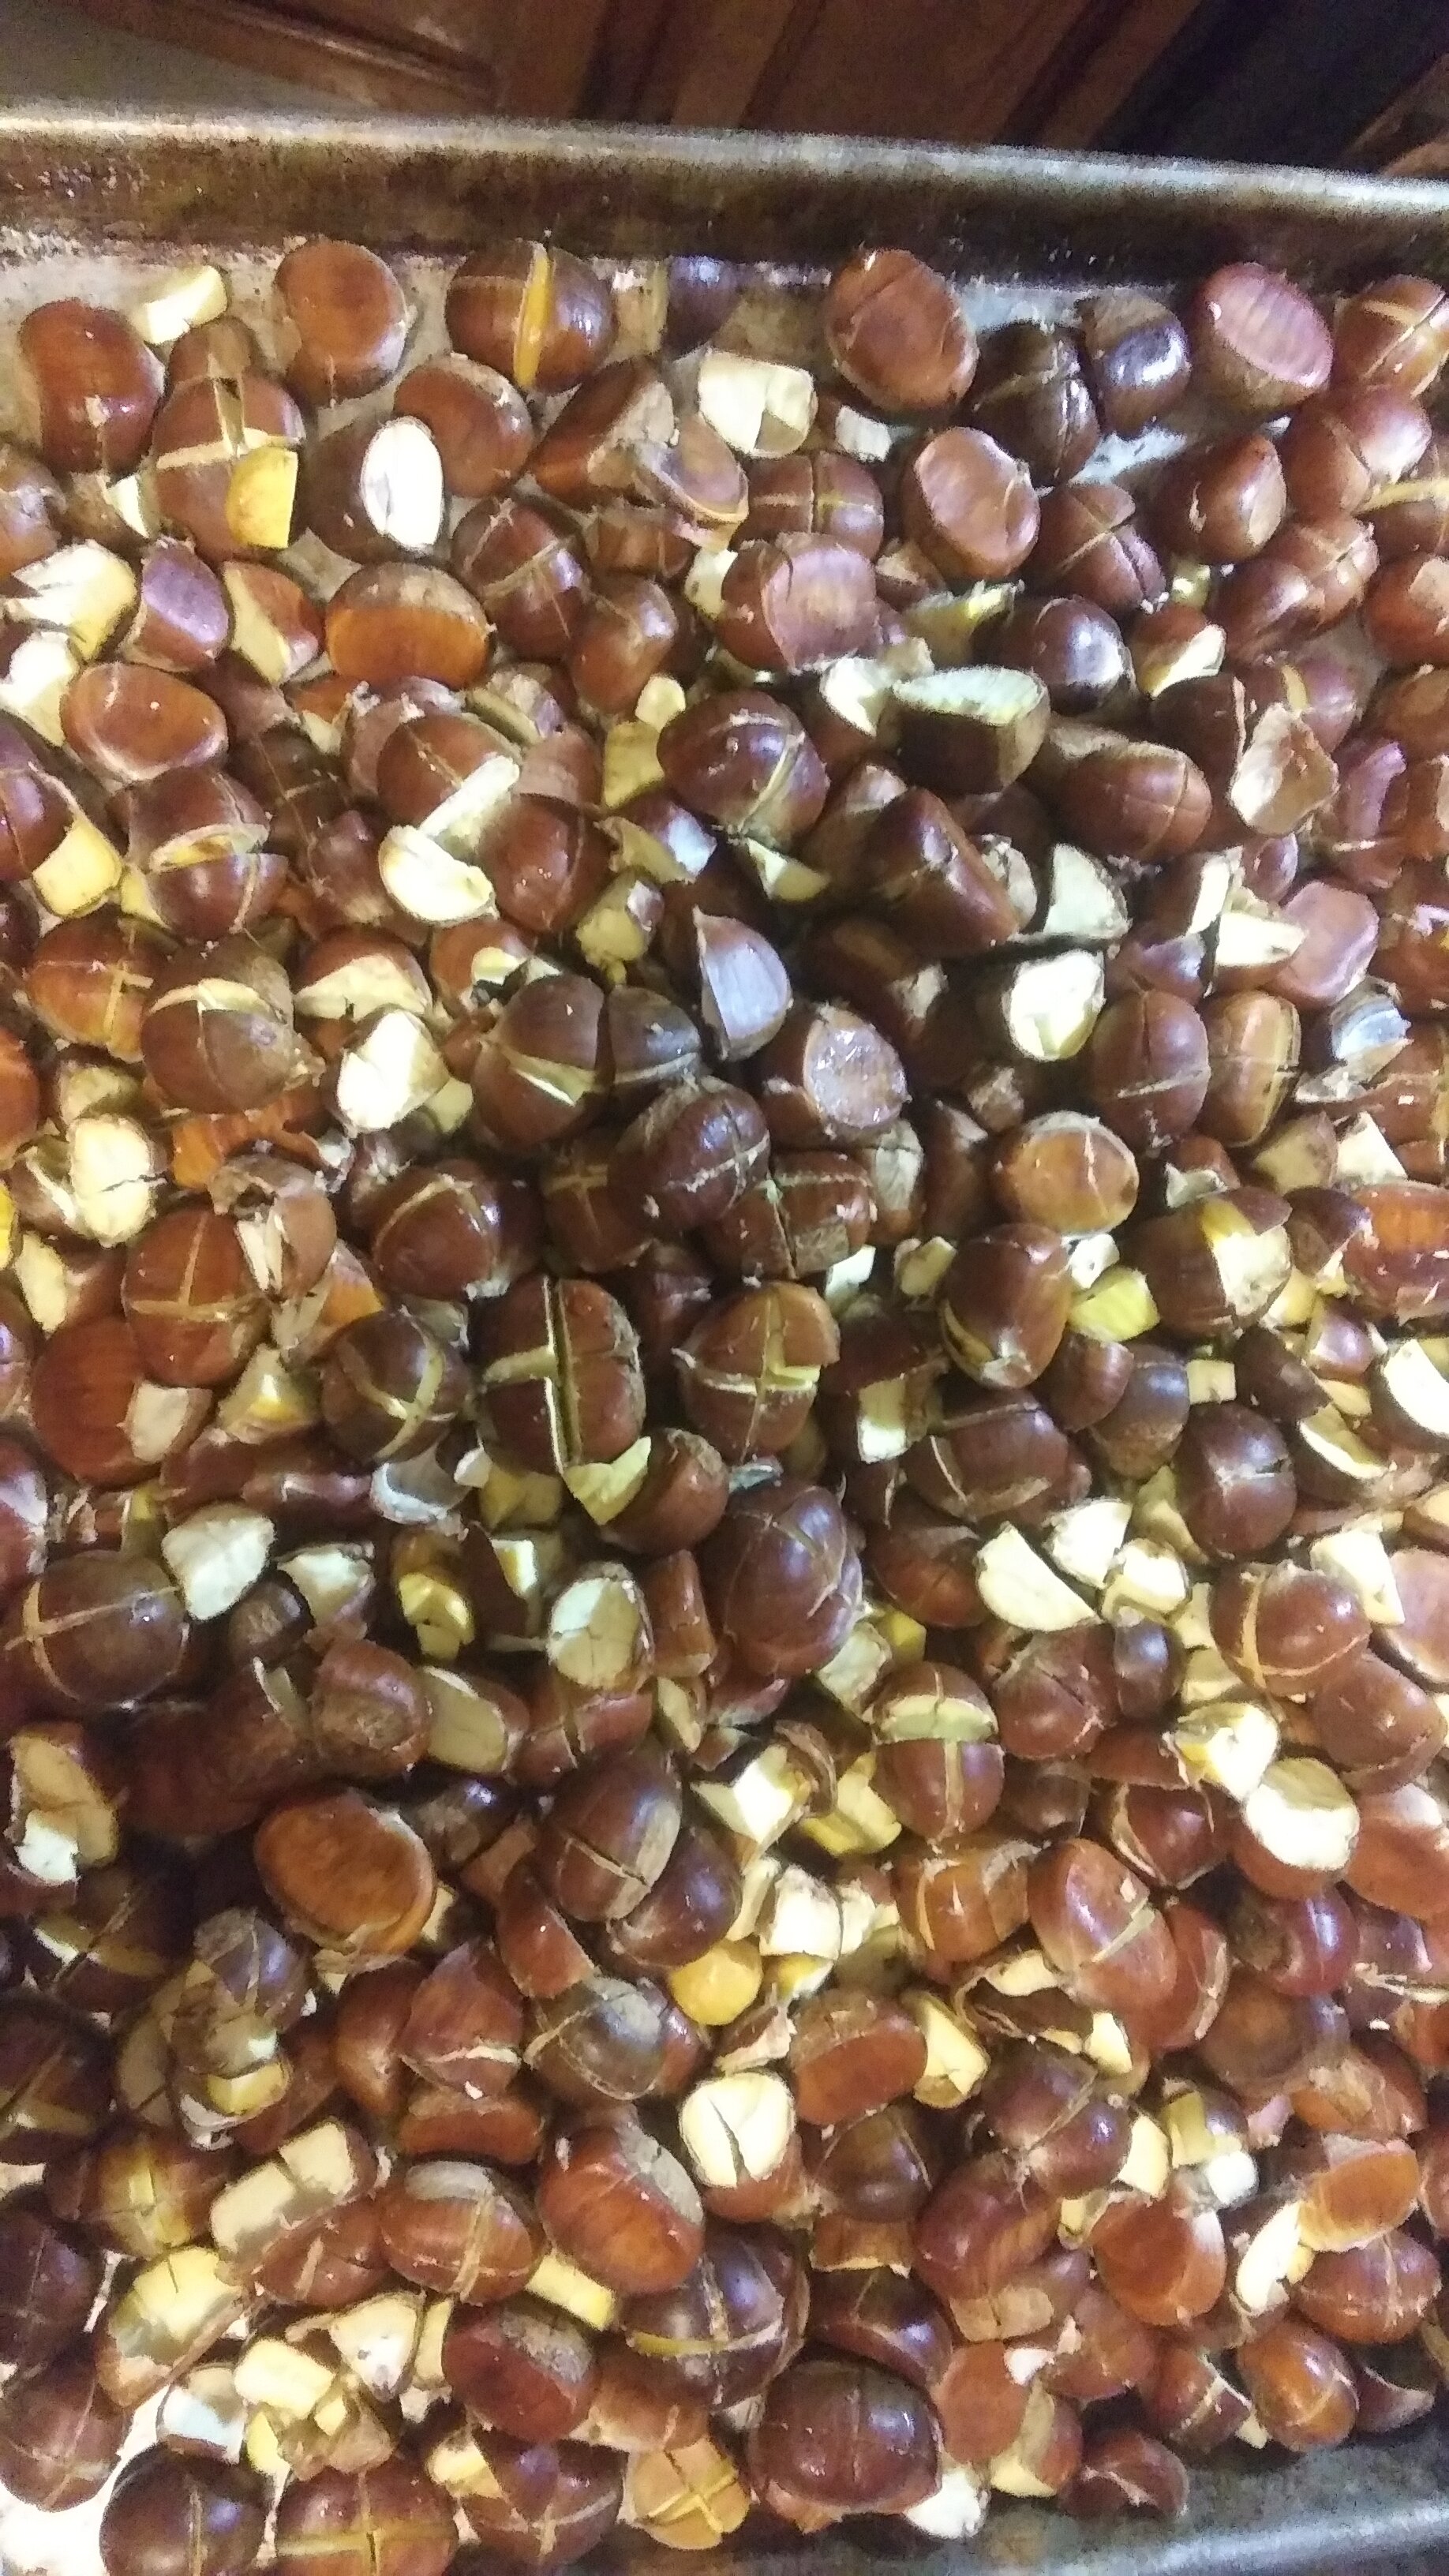 Chestnut processing